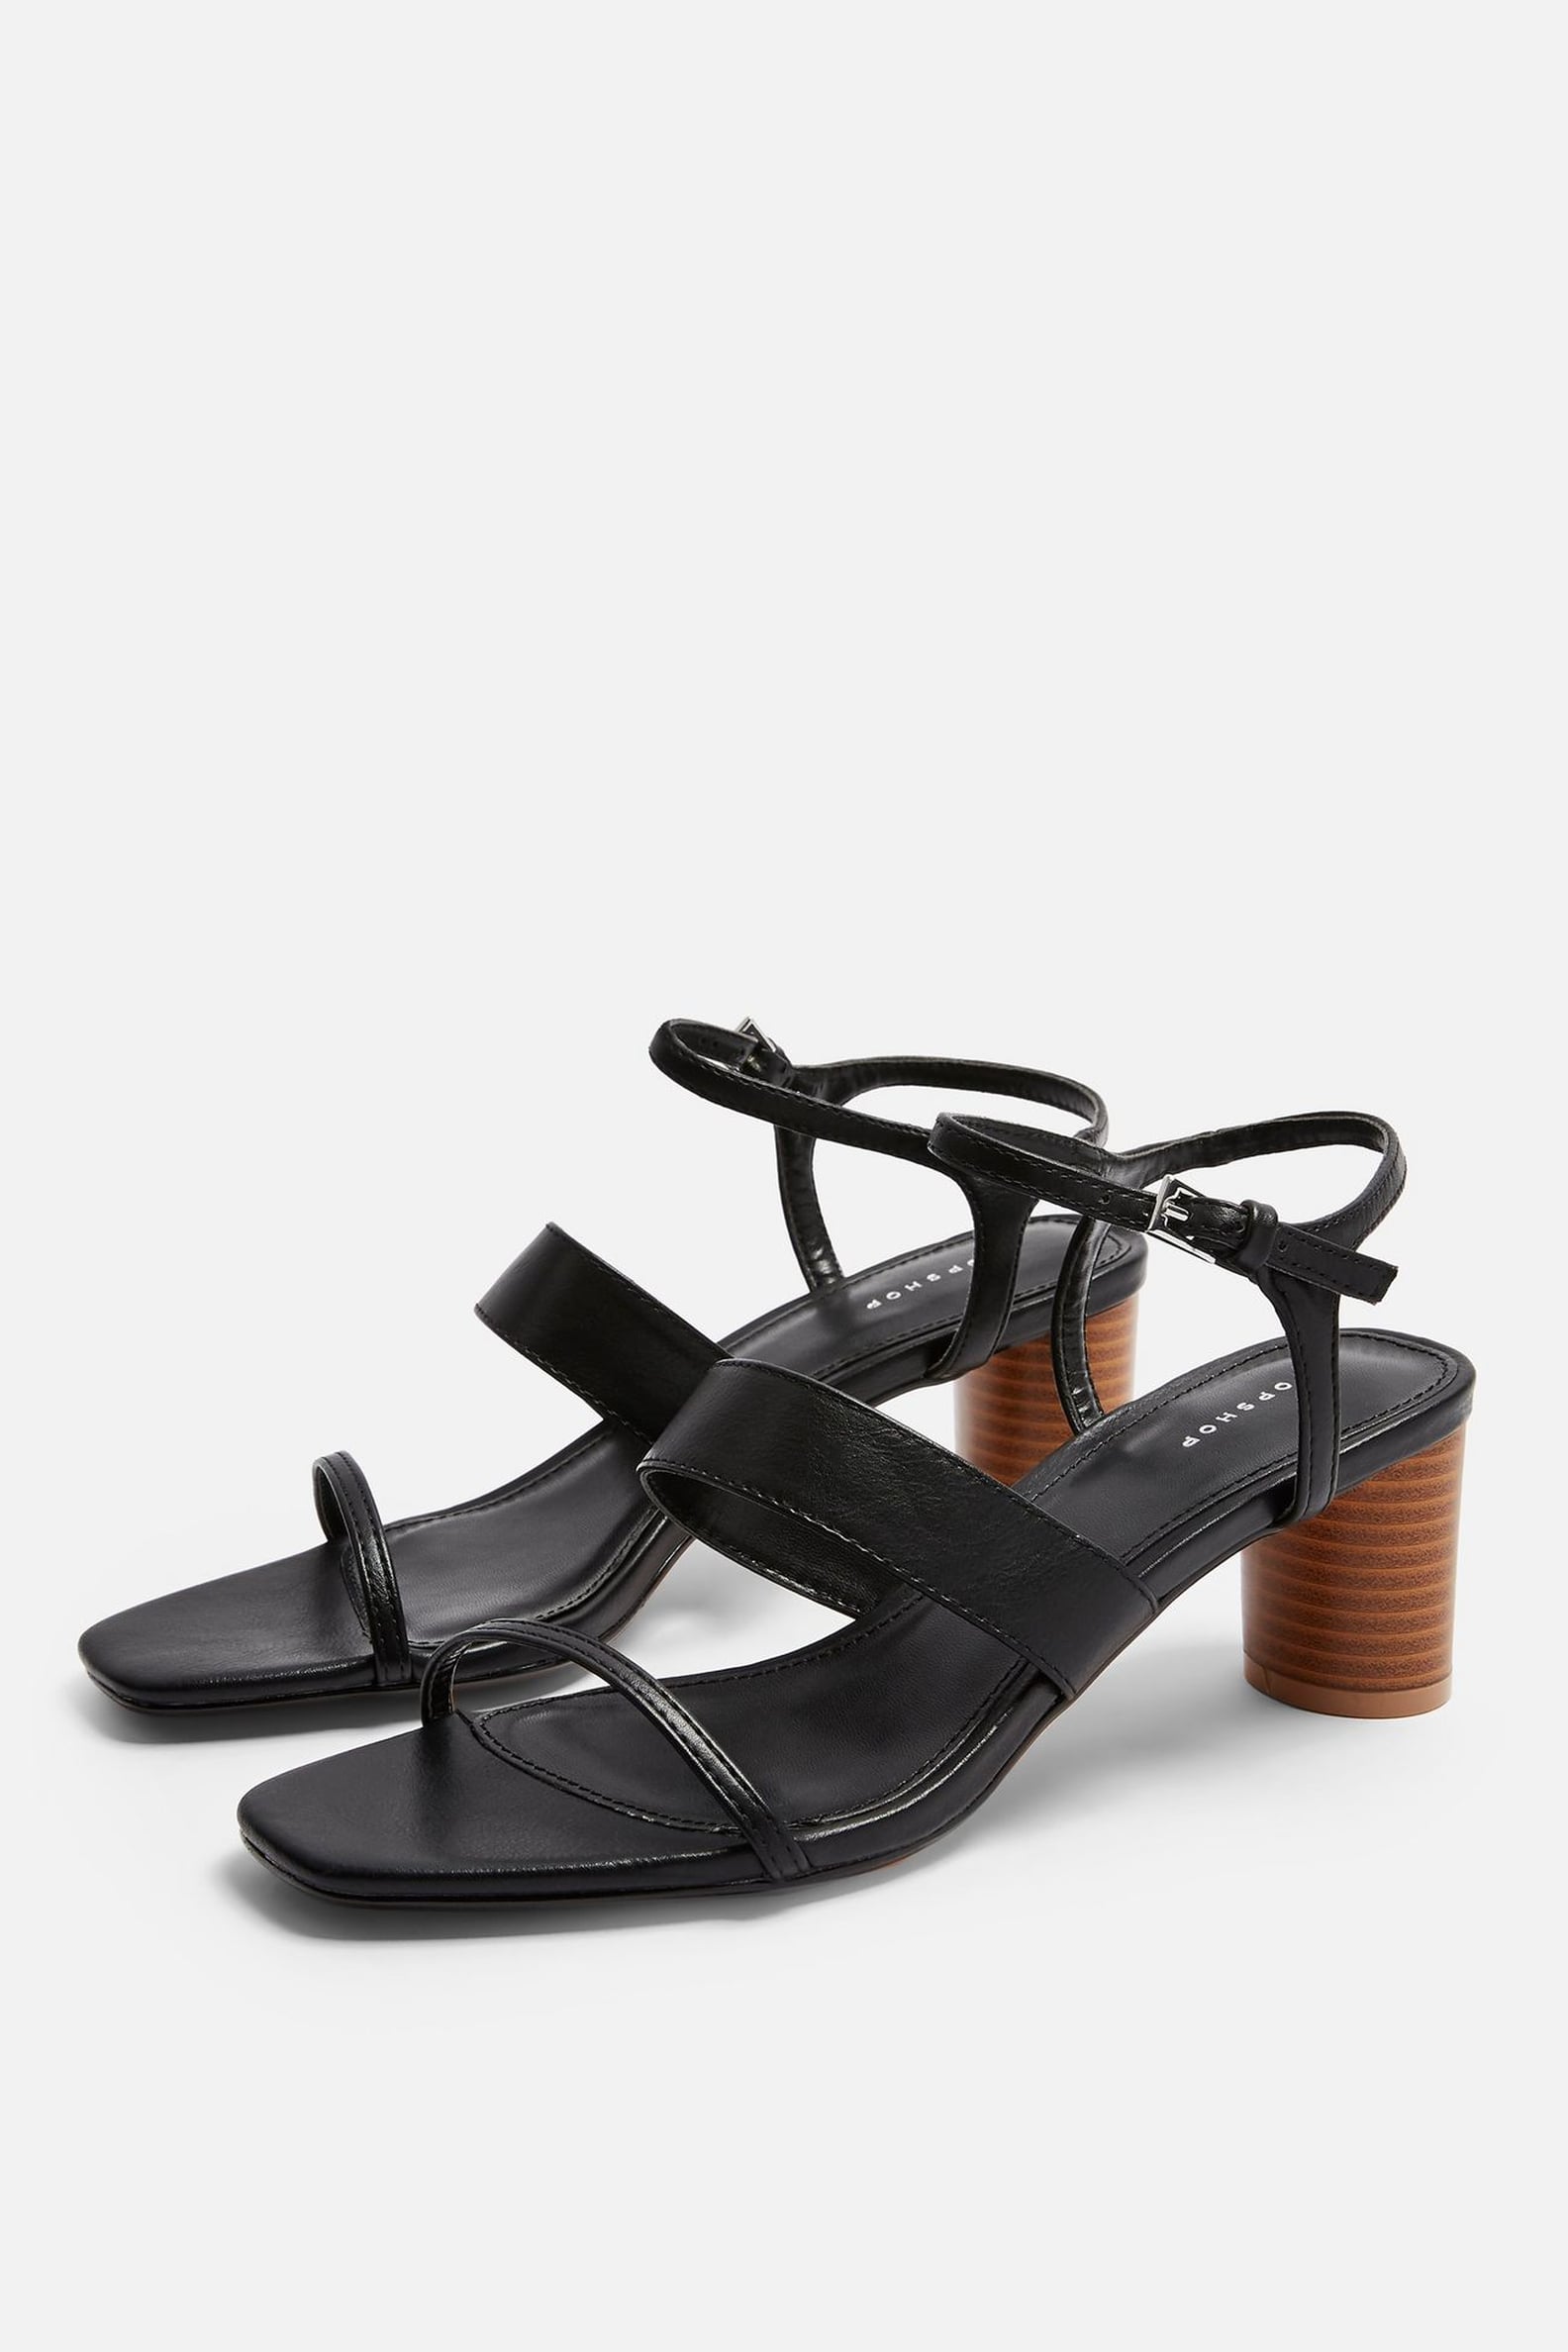 Best Black Sandals For Women | POPSUGAR Fashion